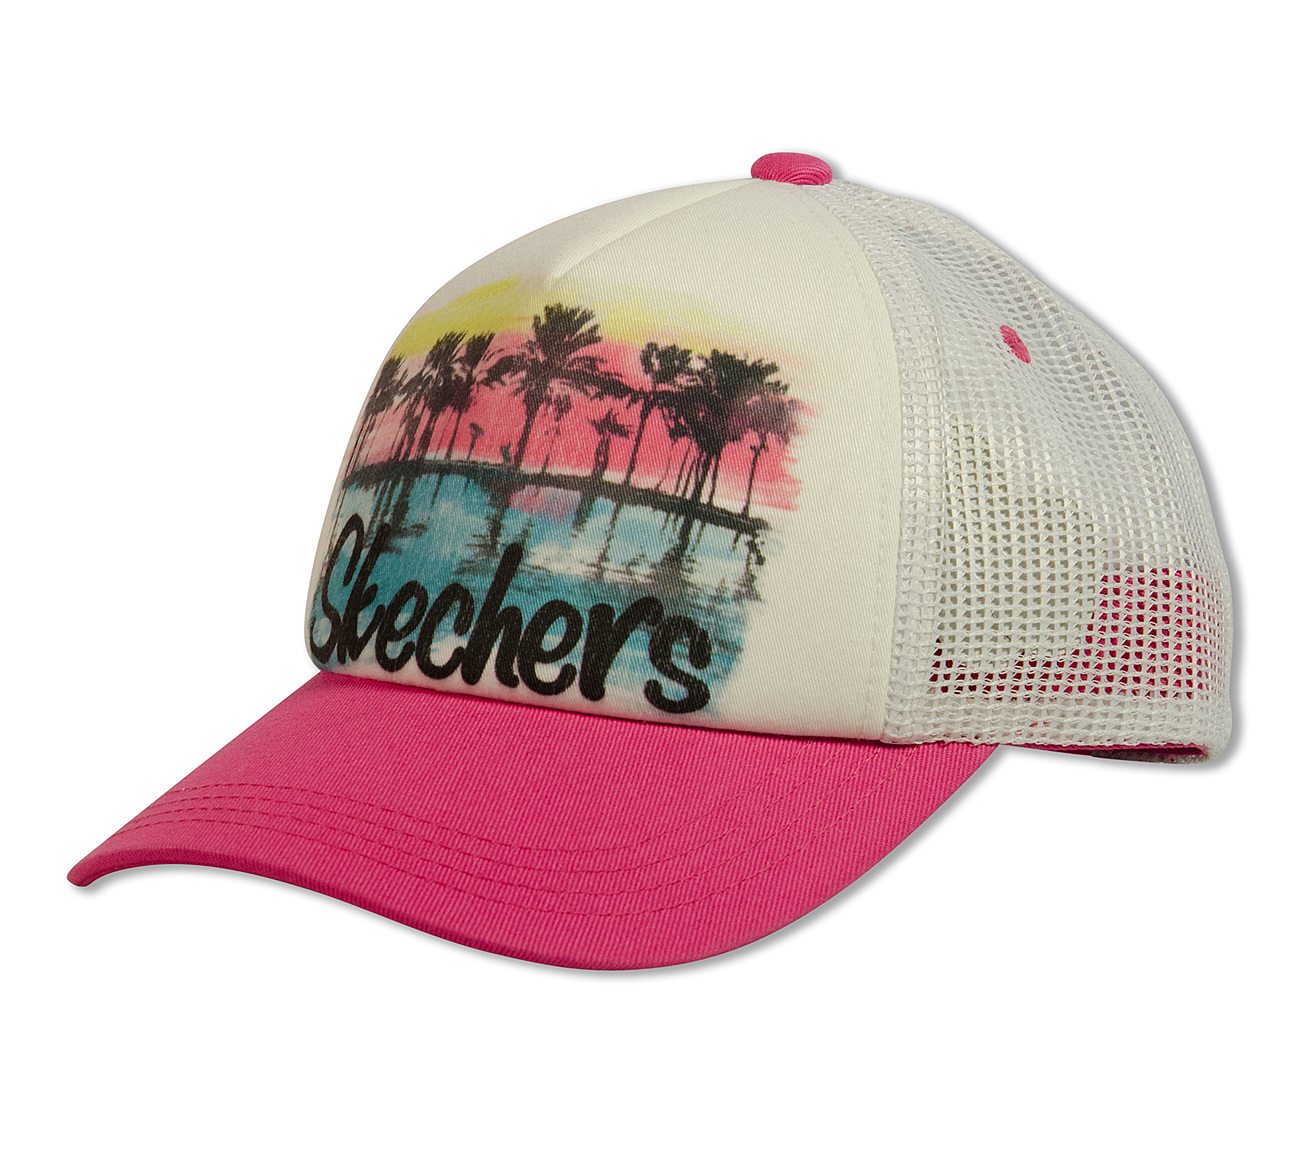 Buy SKECHERS Malibu Youth Trucker Hat Accessories Shoes